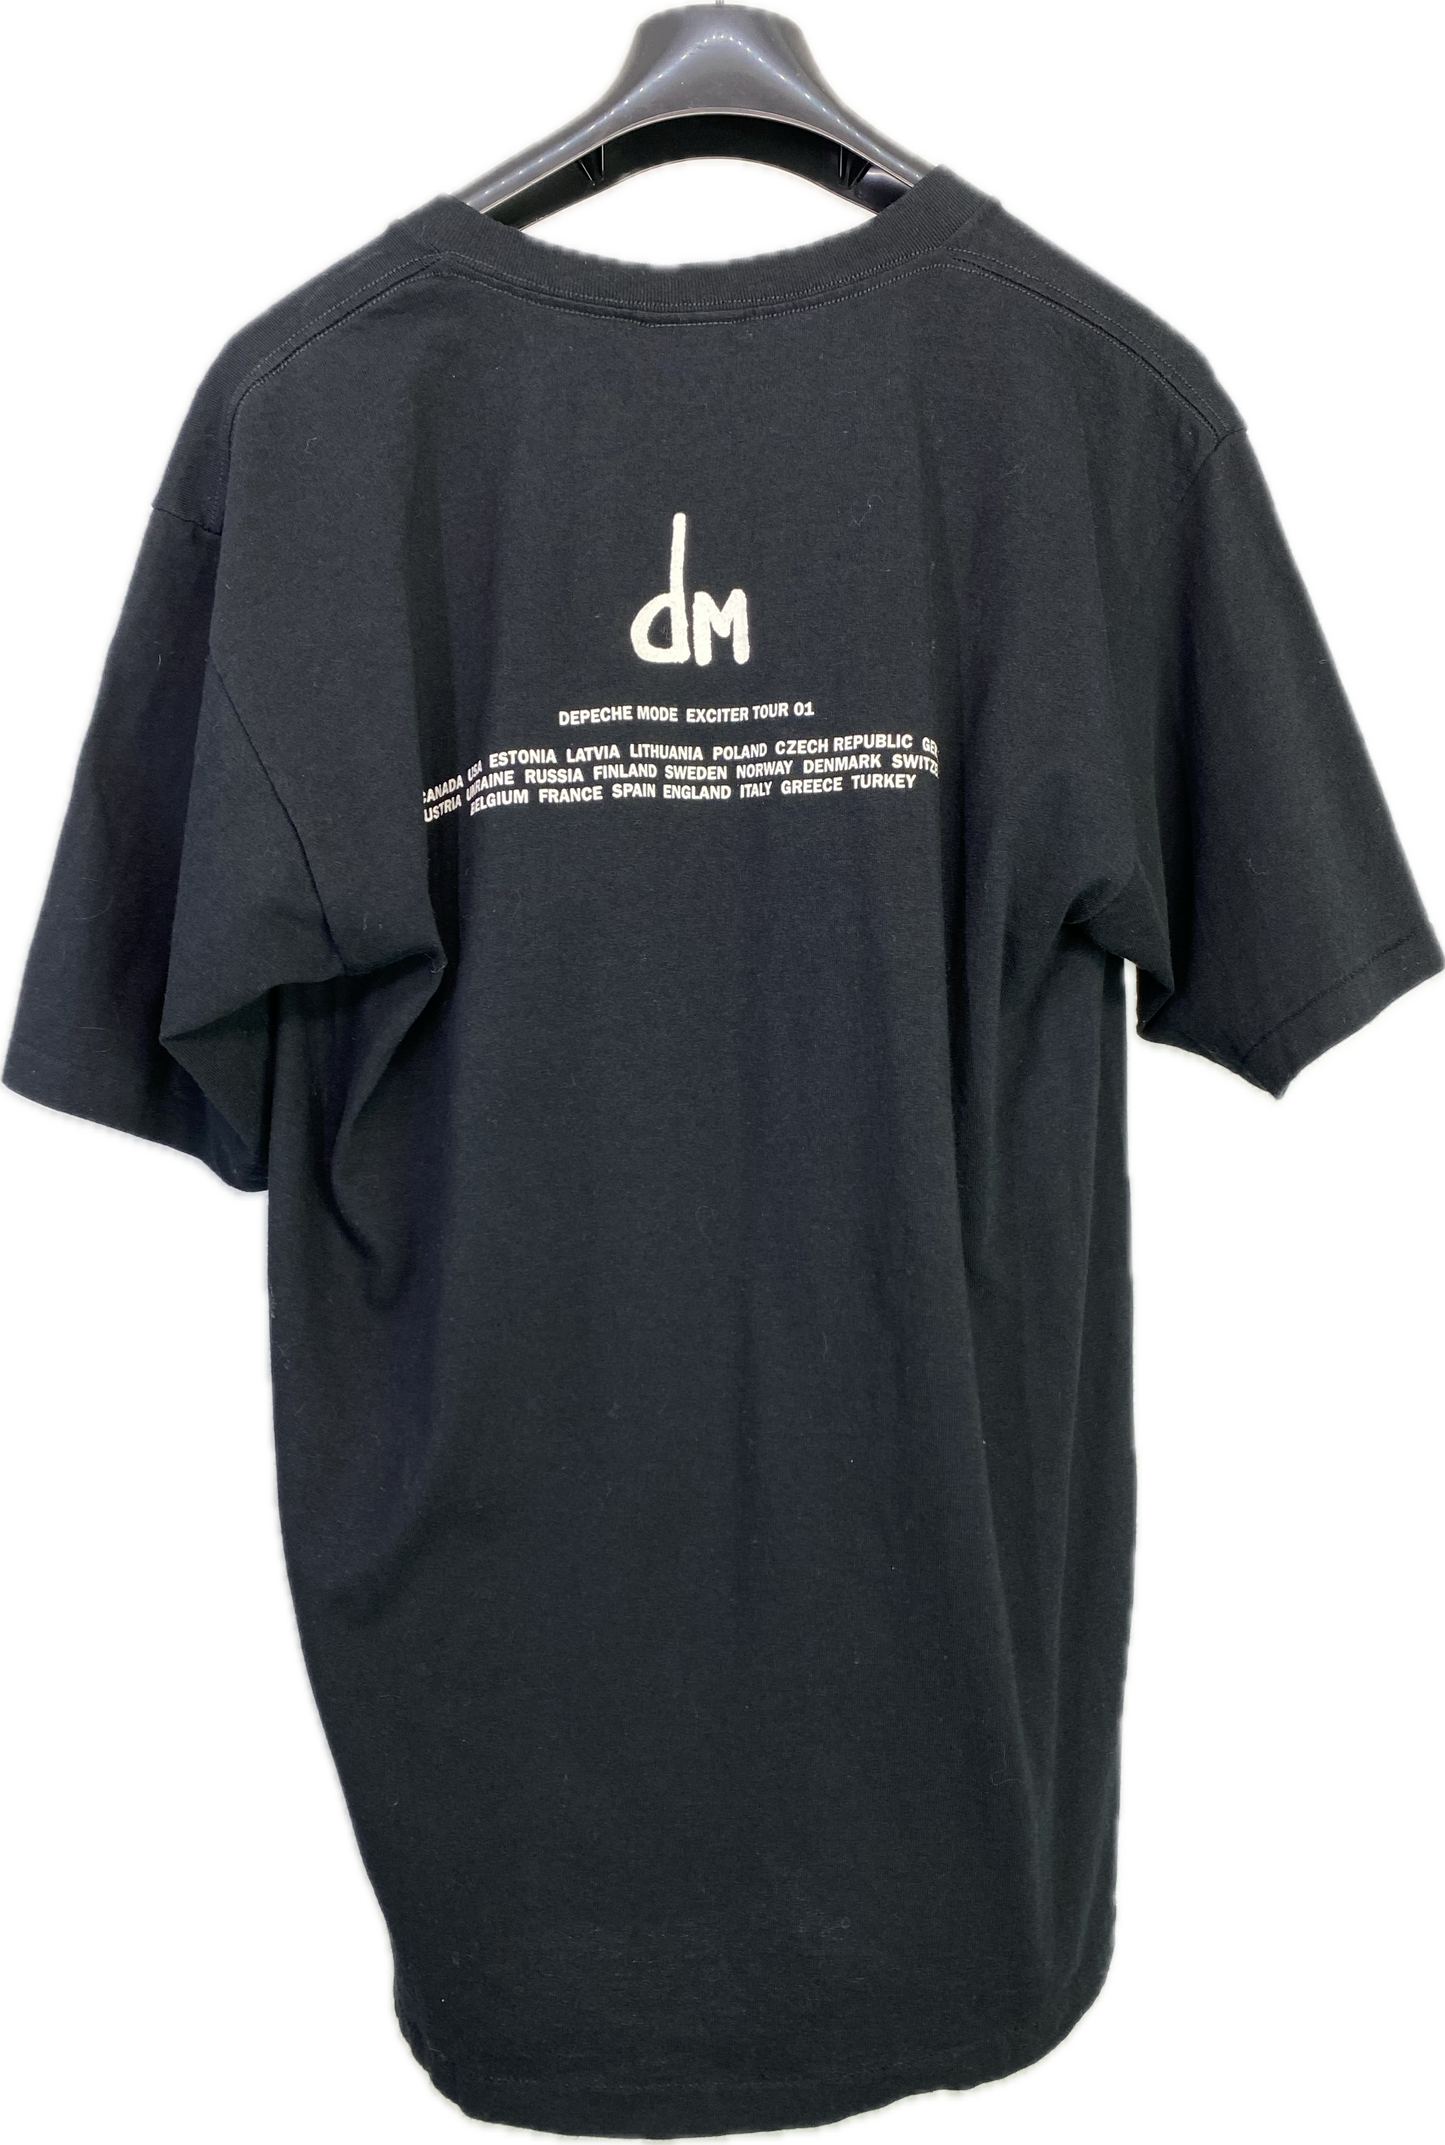 Early 00s Depeche ModeExciter T-Shirt Large